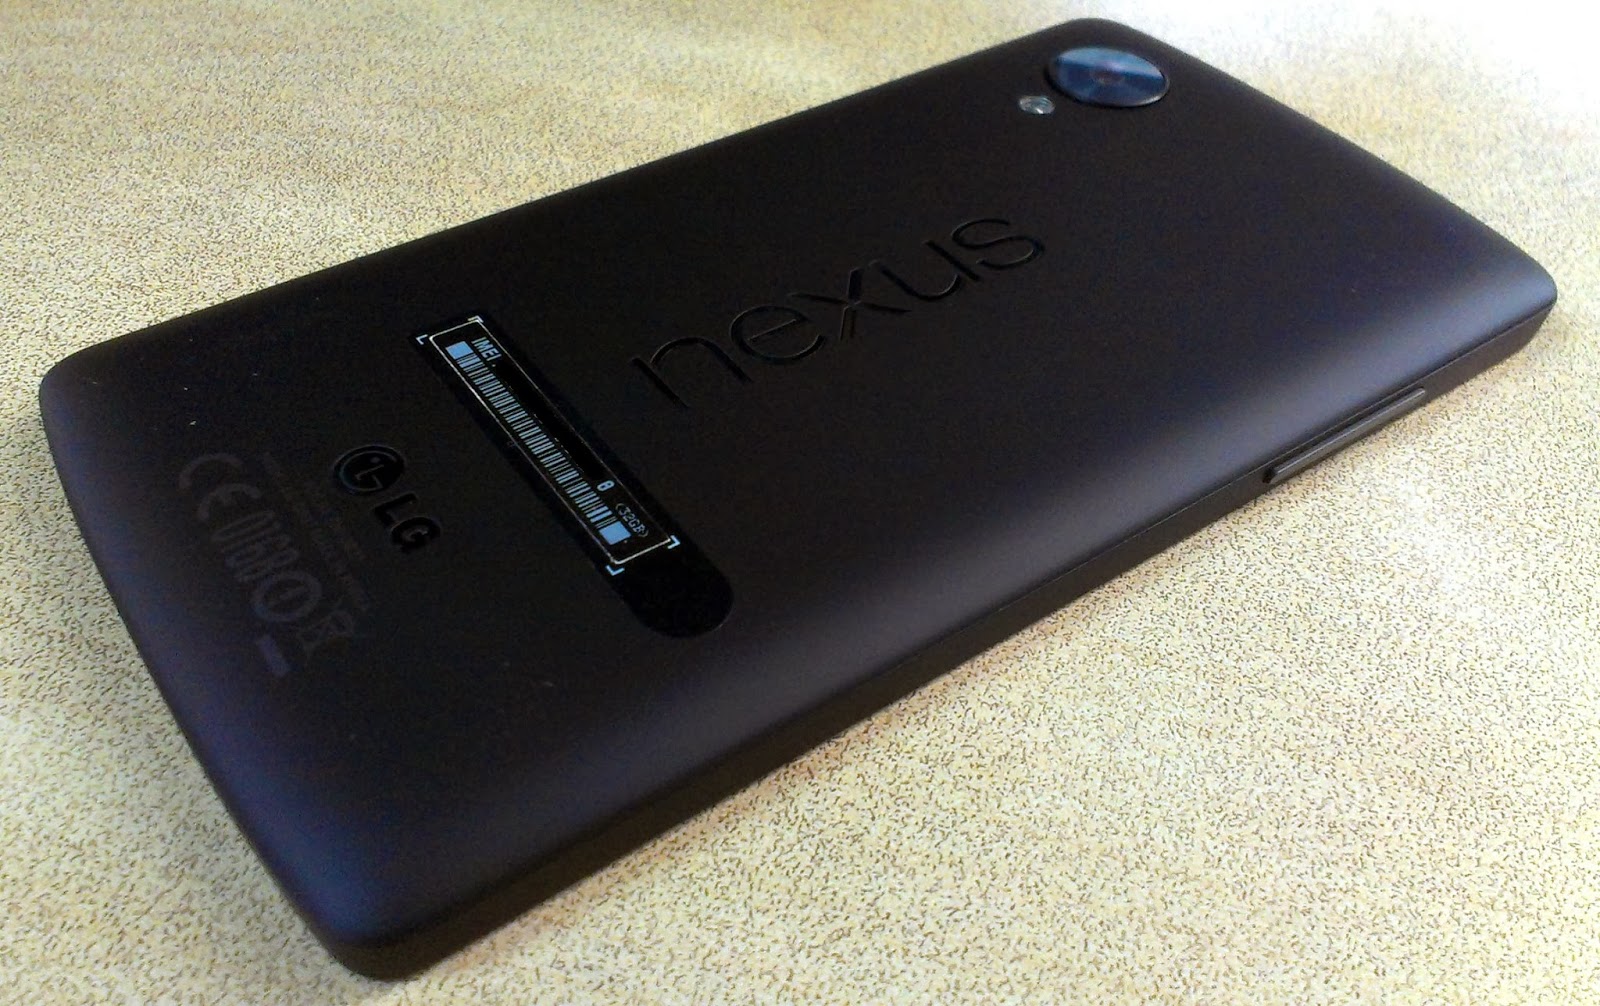 Google+LG+Nexus+5+Android+KitKat+Review+Handson+Detailed+Benchmark++%25289%2529.jpg